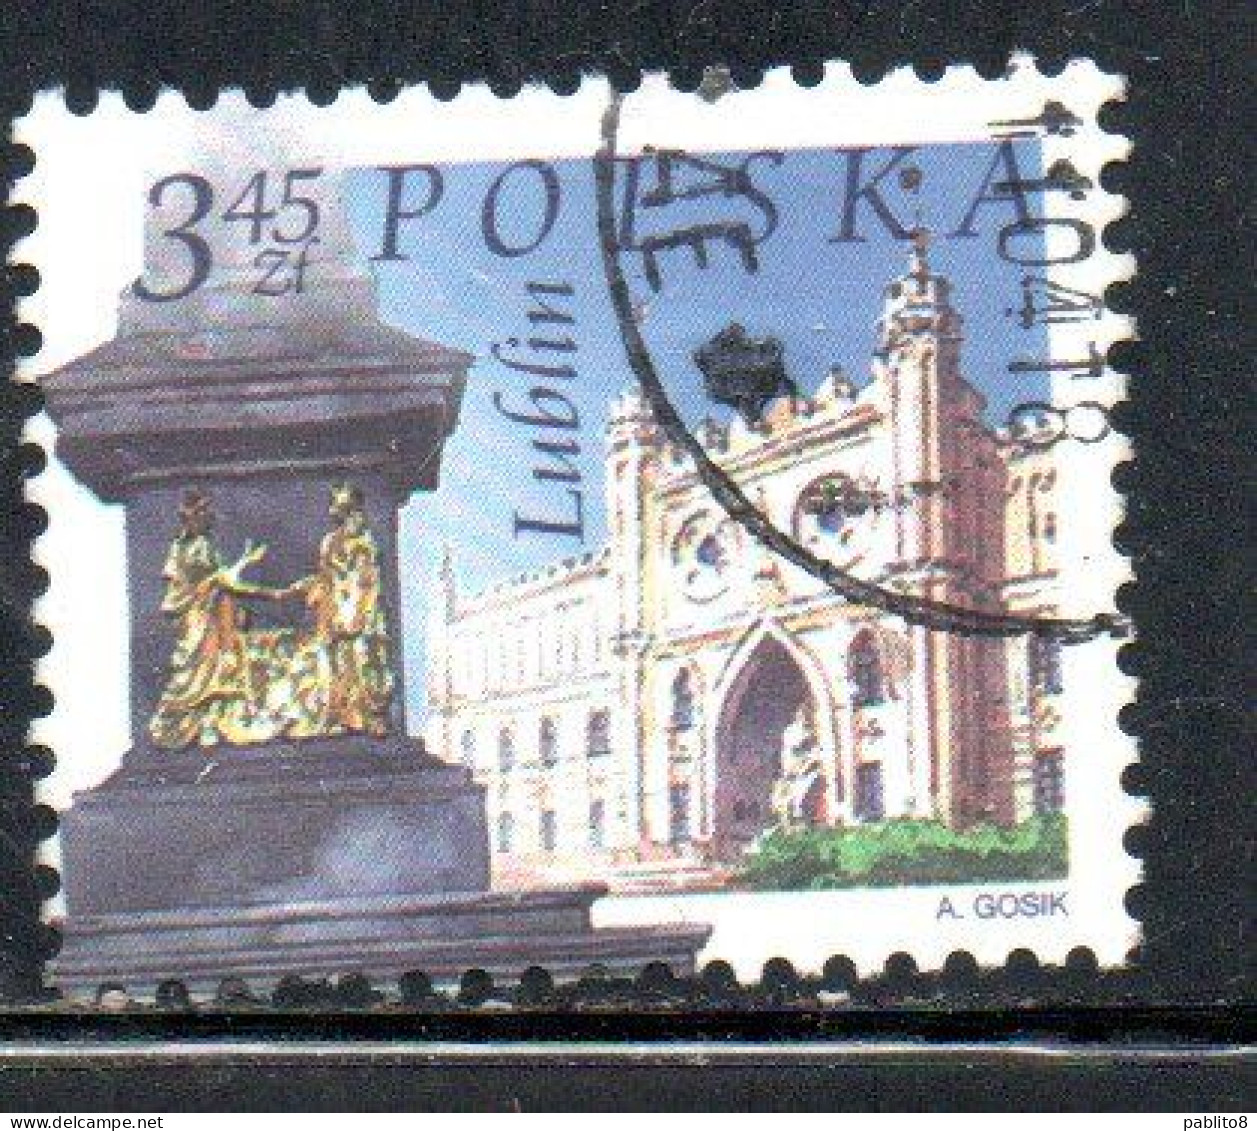 POLONIA POLAND POLSKA 2004 CITY UNION MONUMENT LUBLIC CASTLE PALACE  1.20z USATO USED OBLITERE' - Used Stamps